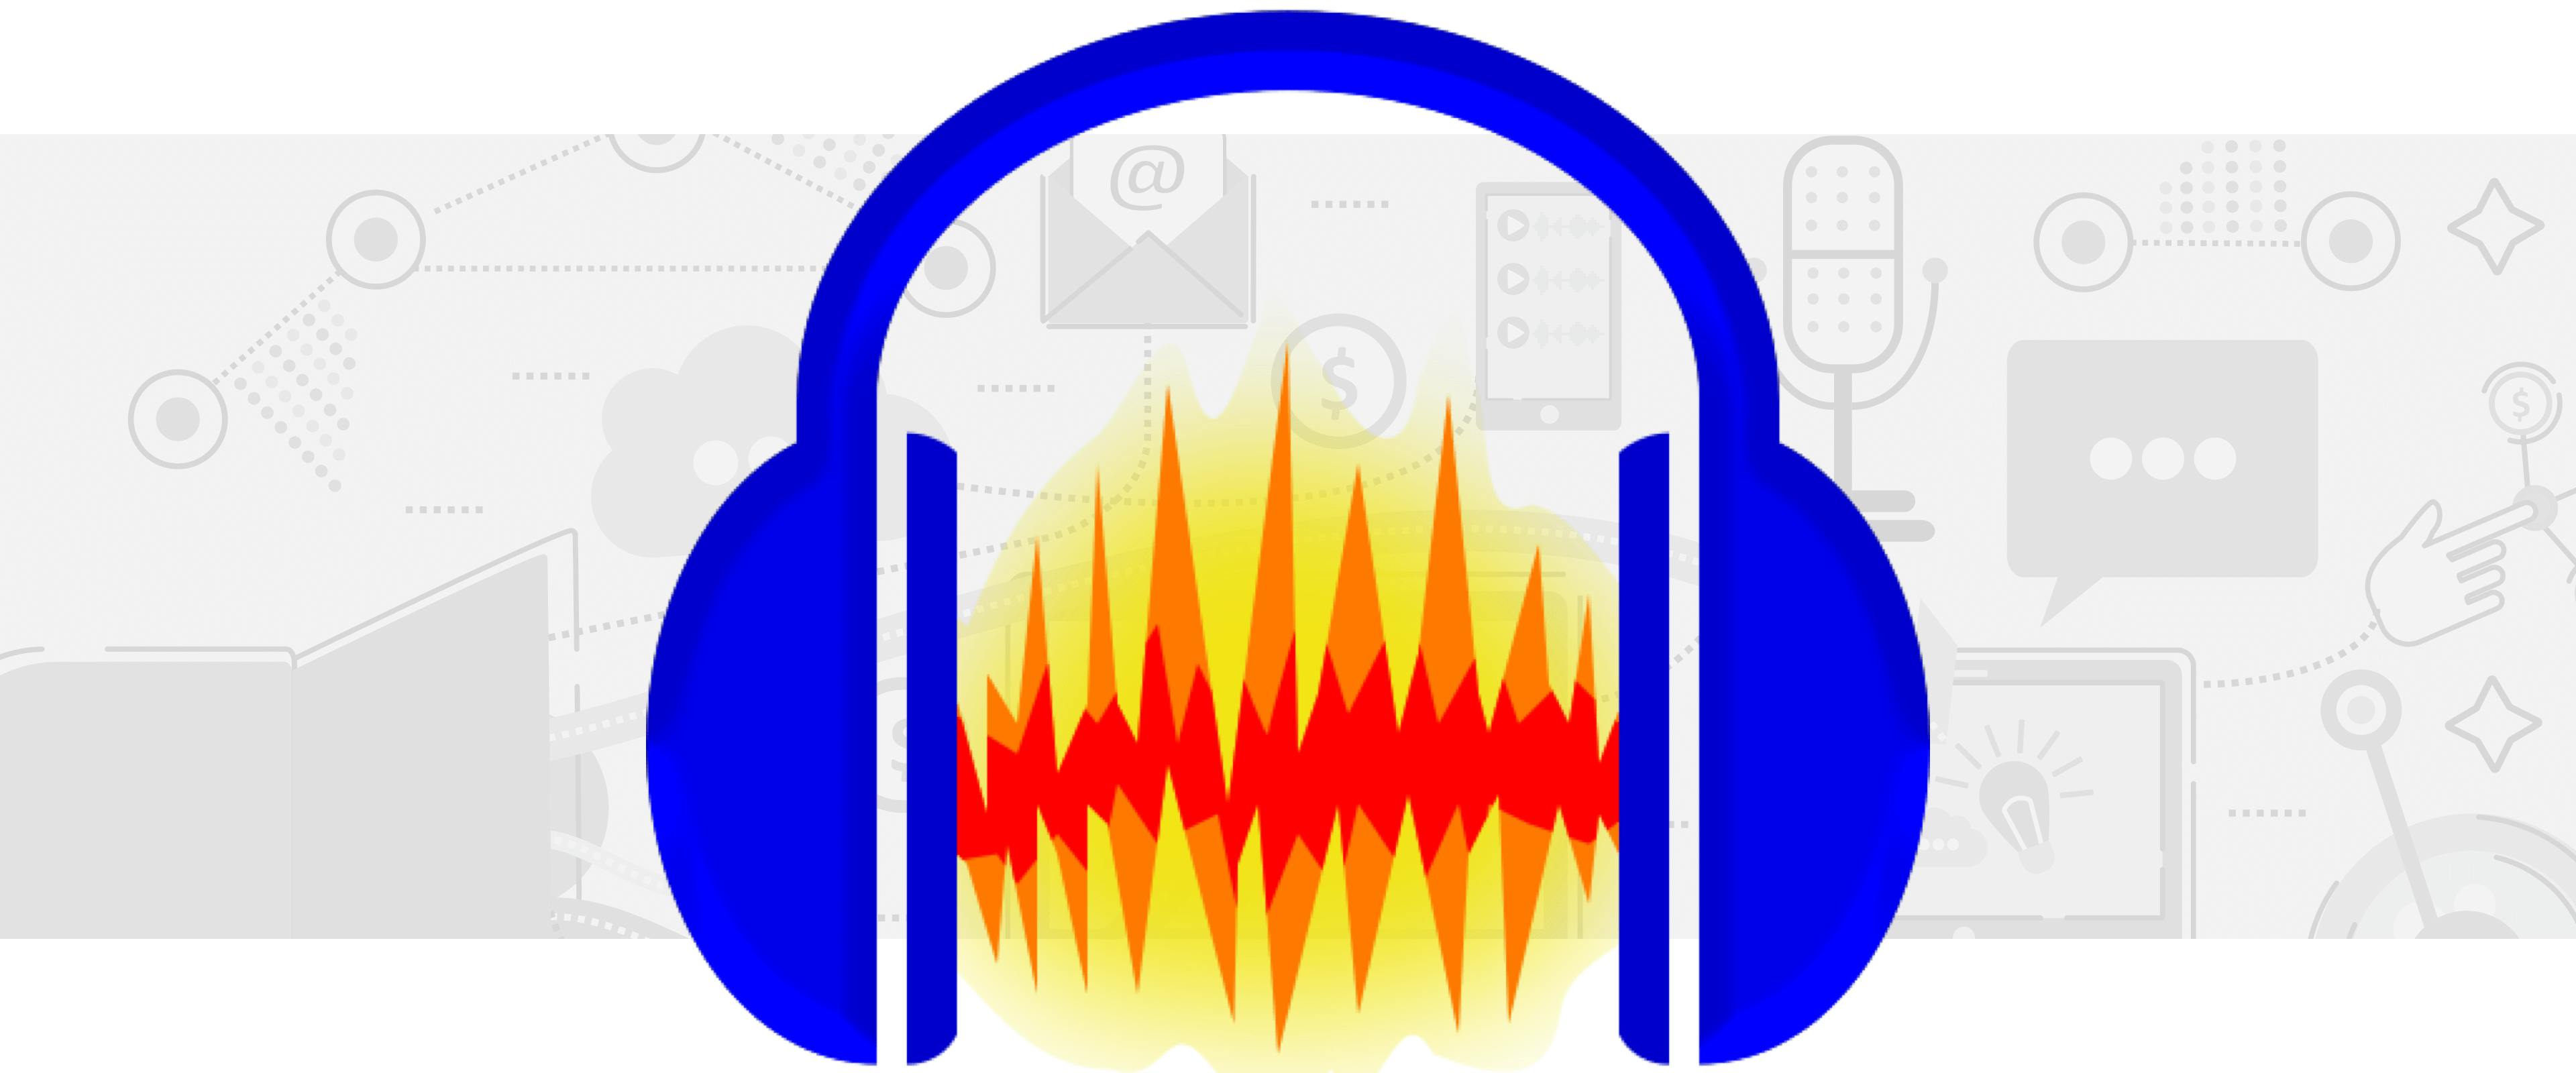 Audacity icon with headphones and waveform in between 